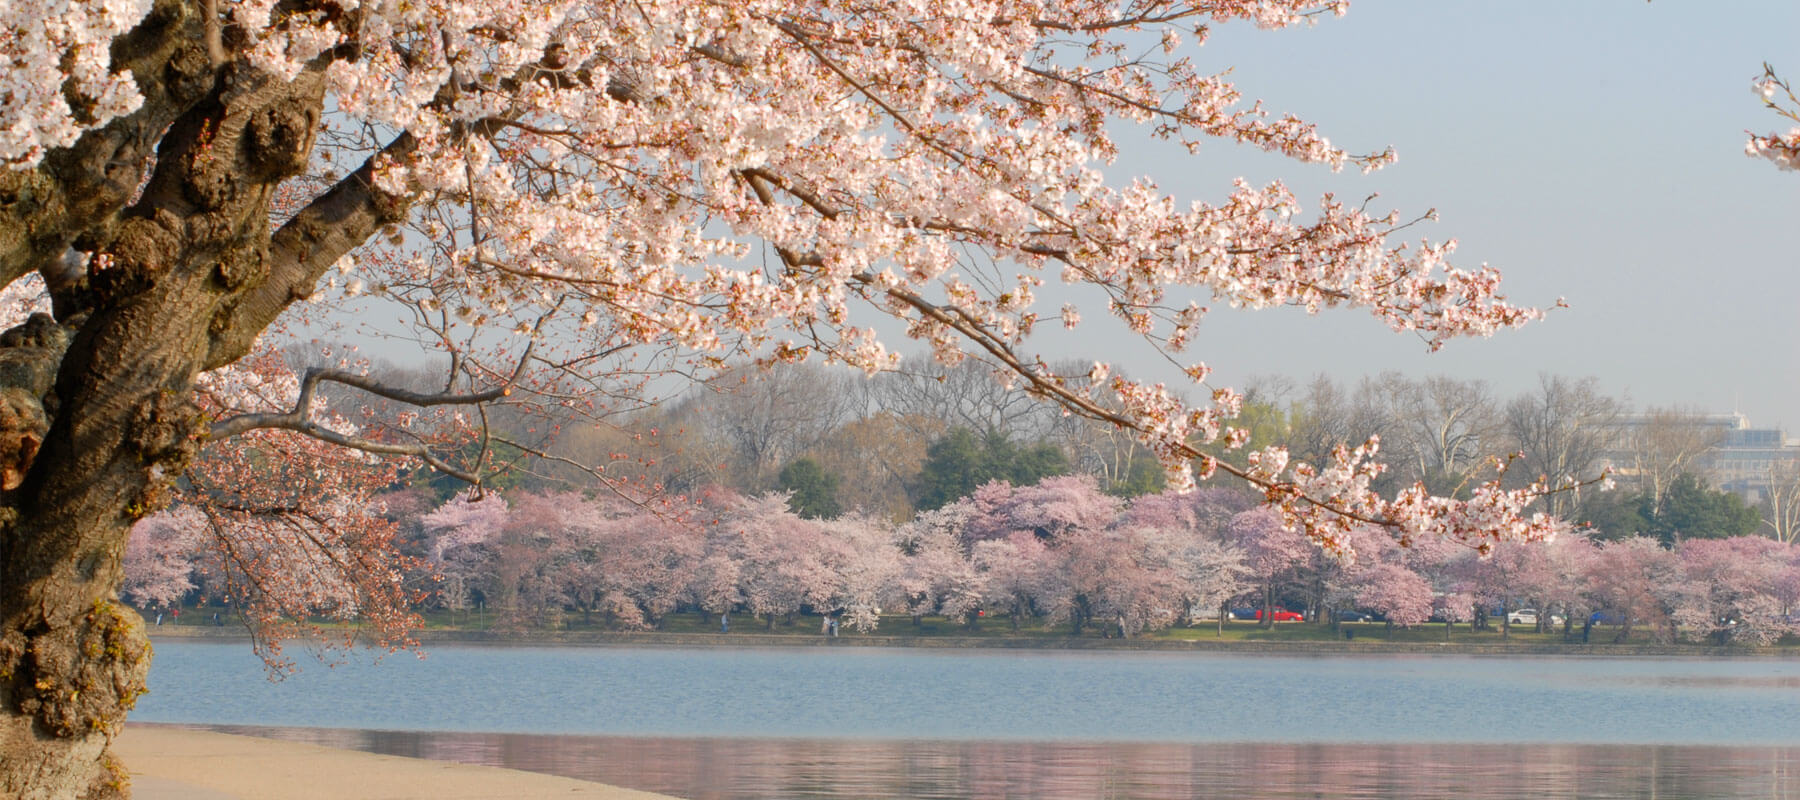 https://www.arlingtontours.com/wp-content/uploads/2016/04/cherry-blossom-tree-festival.jpg